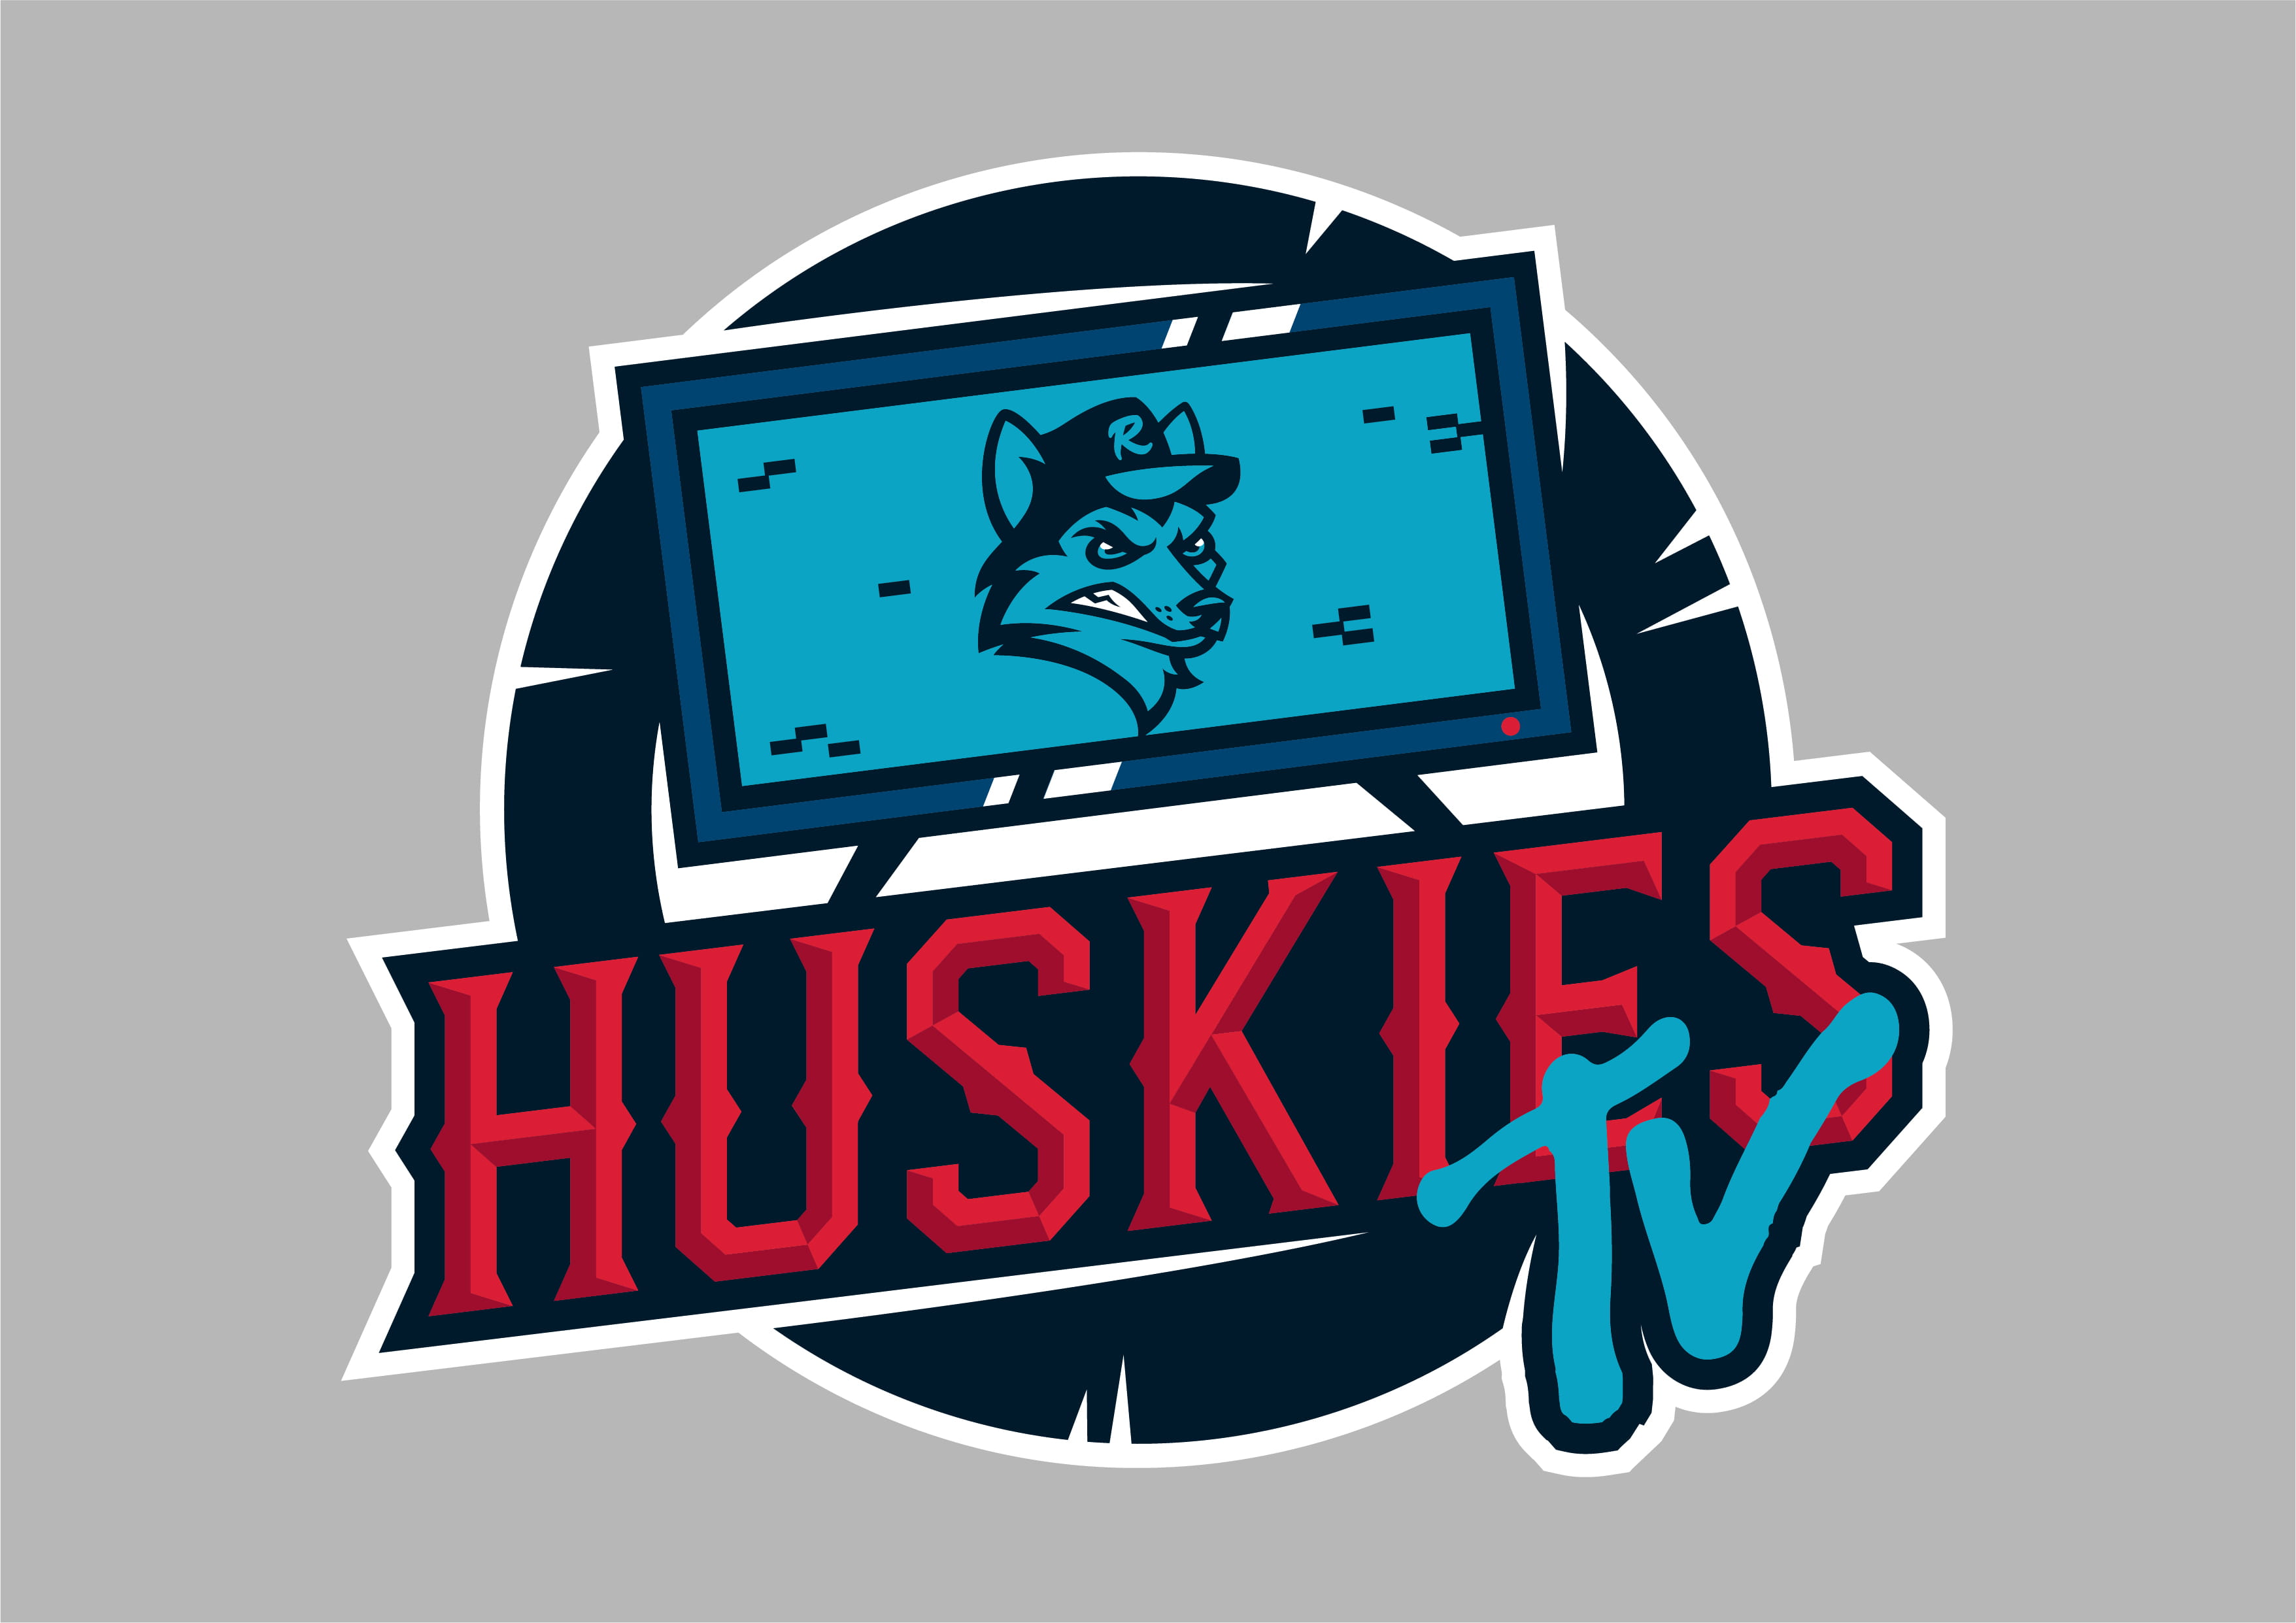 huskies TV logo.jpg